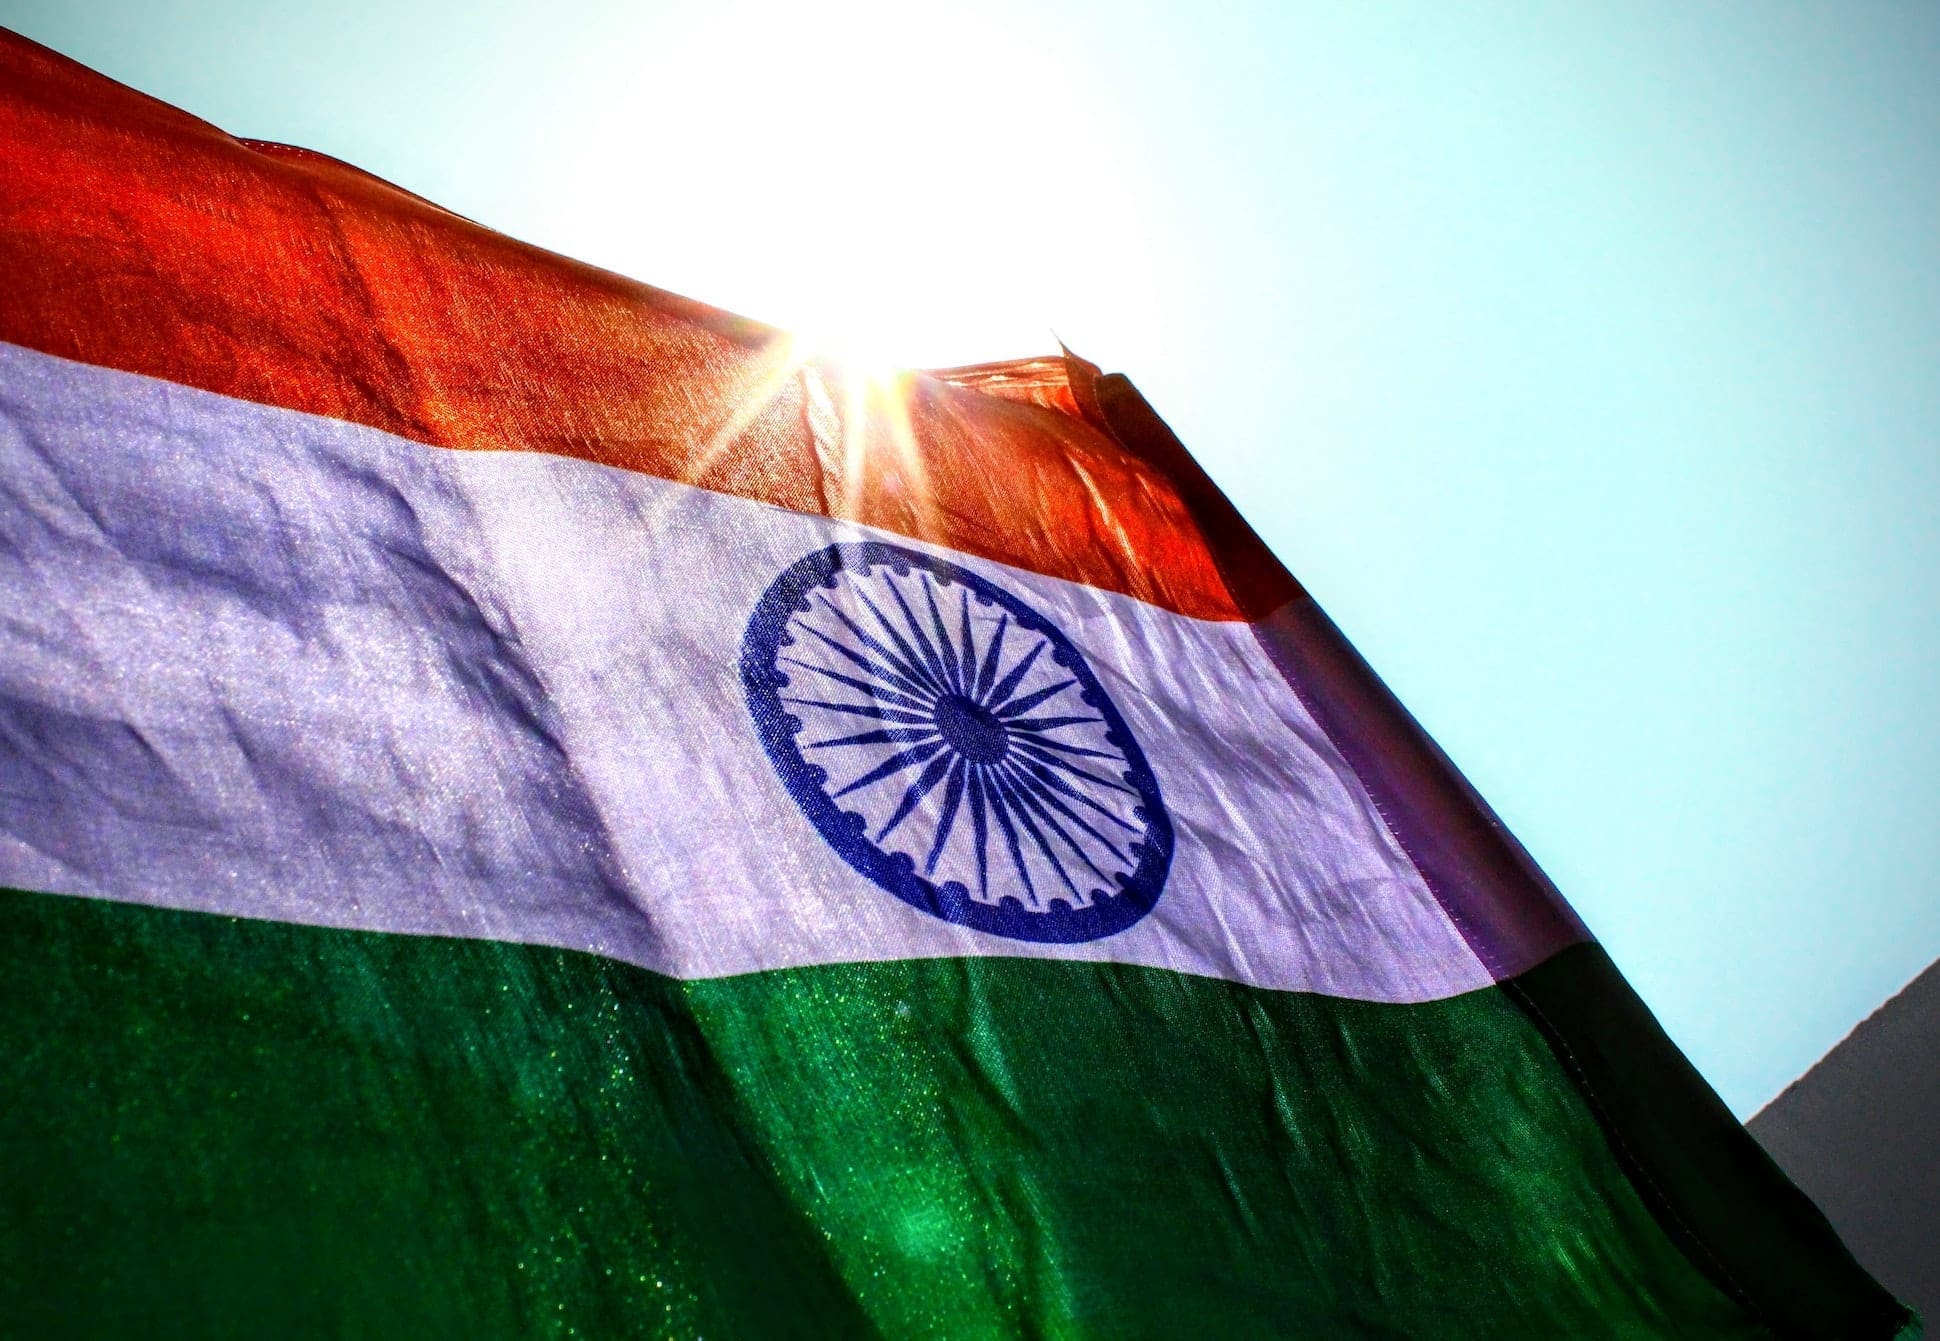 Indian flag by Aniyora J for Unsplash